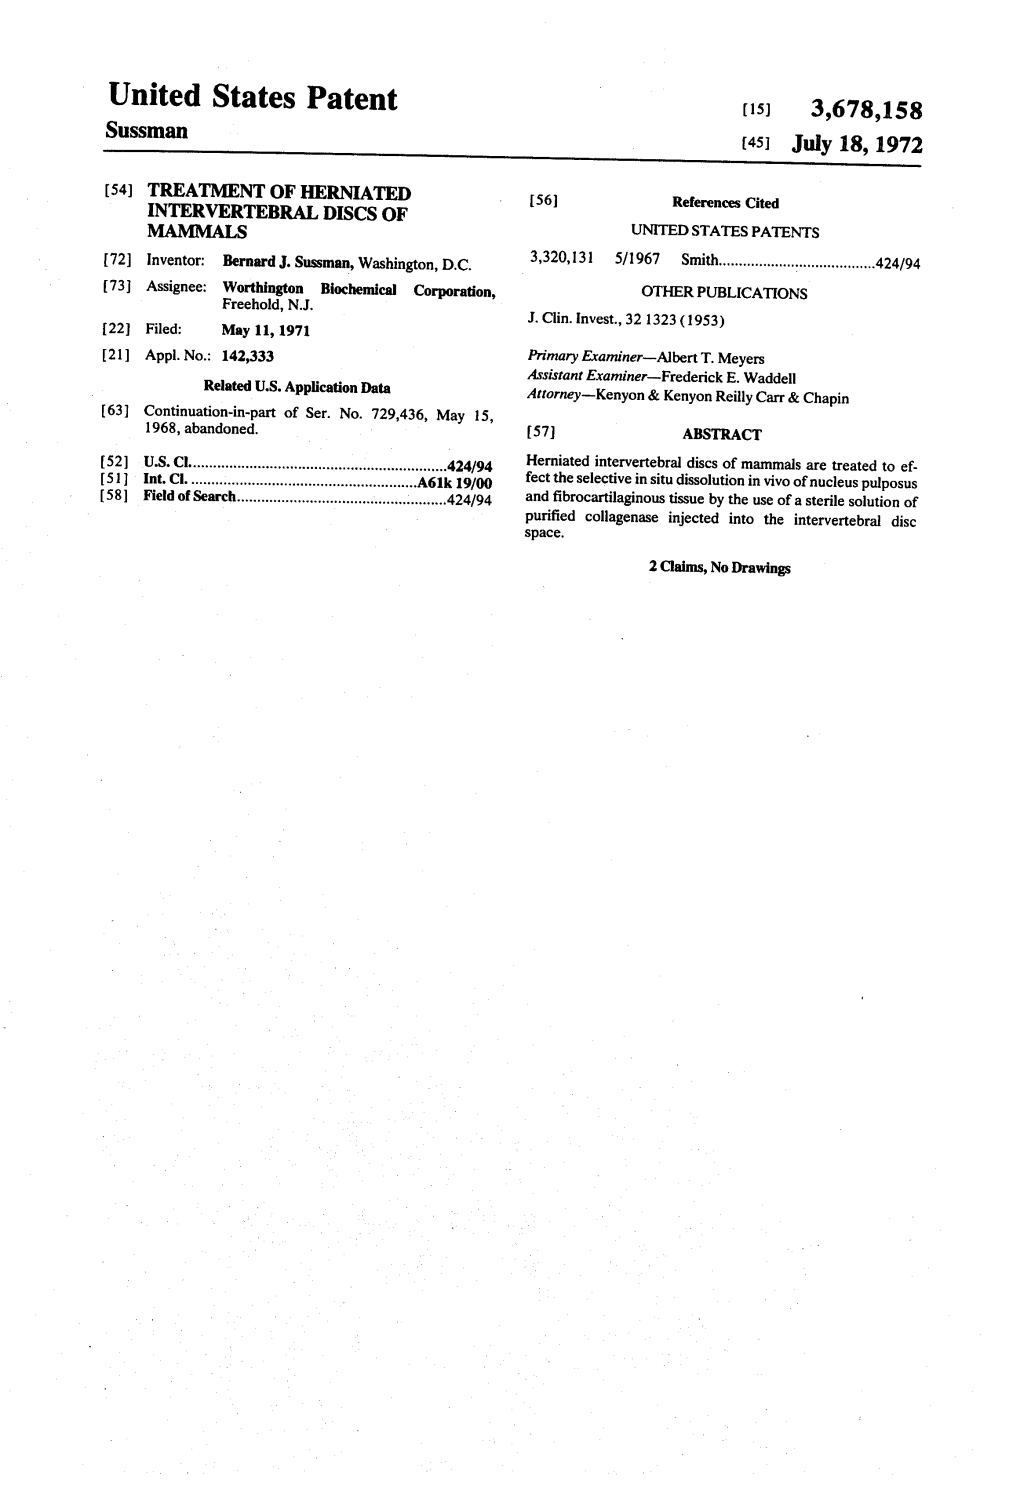 United States Patent (15) 3,678,158 Sussman (45) July 18, 1972